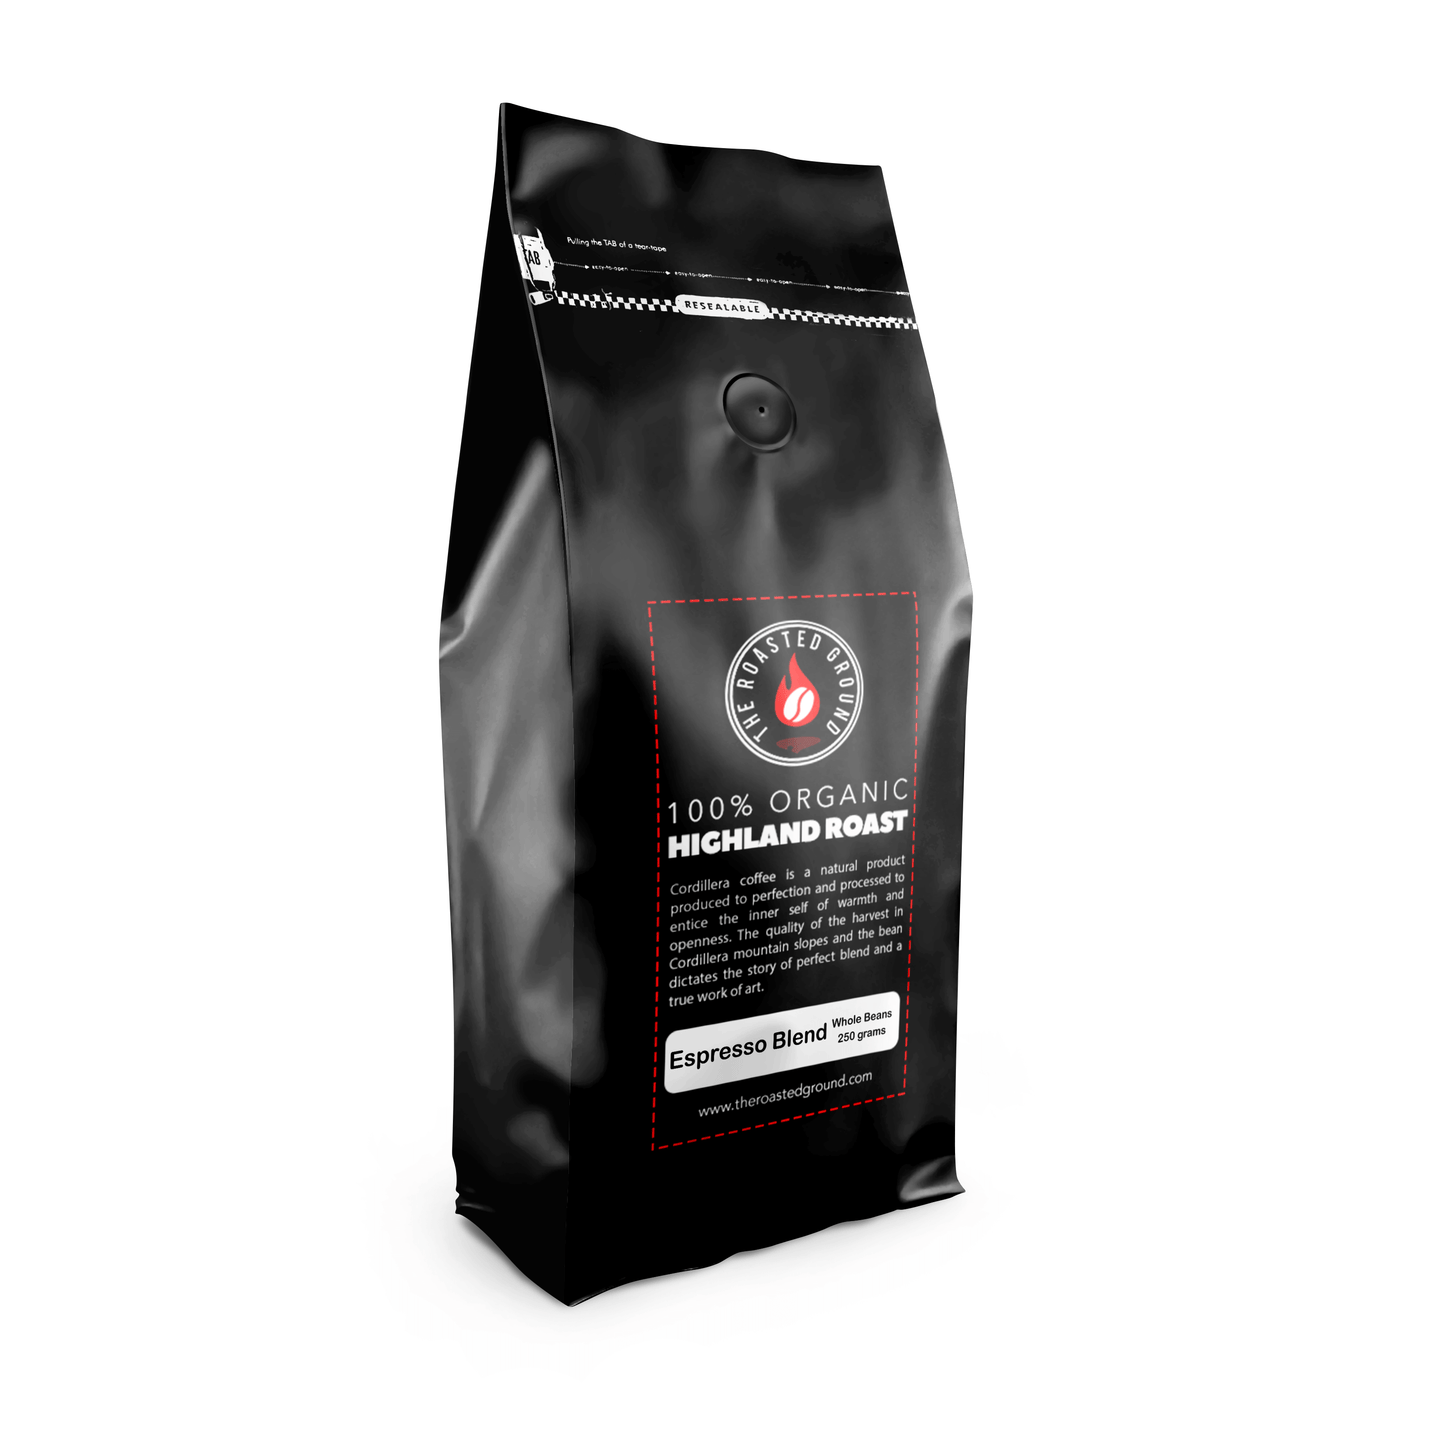 Espresso - Premium Coffee (Whole Beans / Ground) - The Roasted Ground